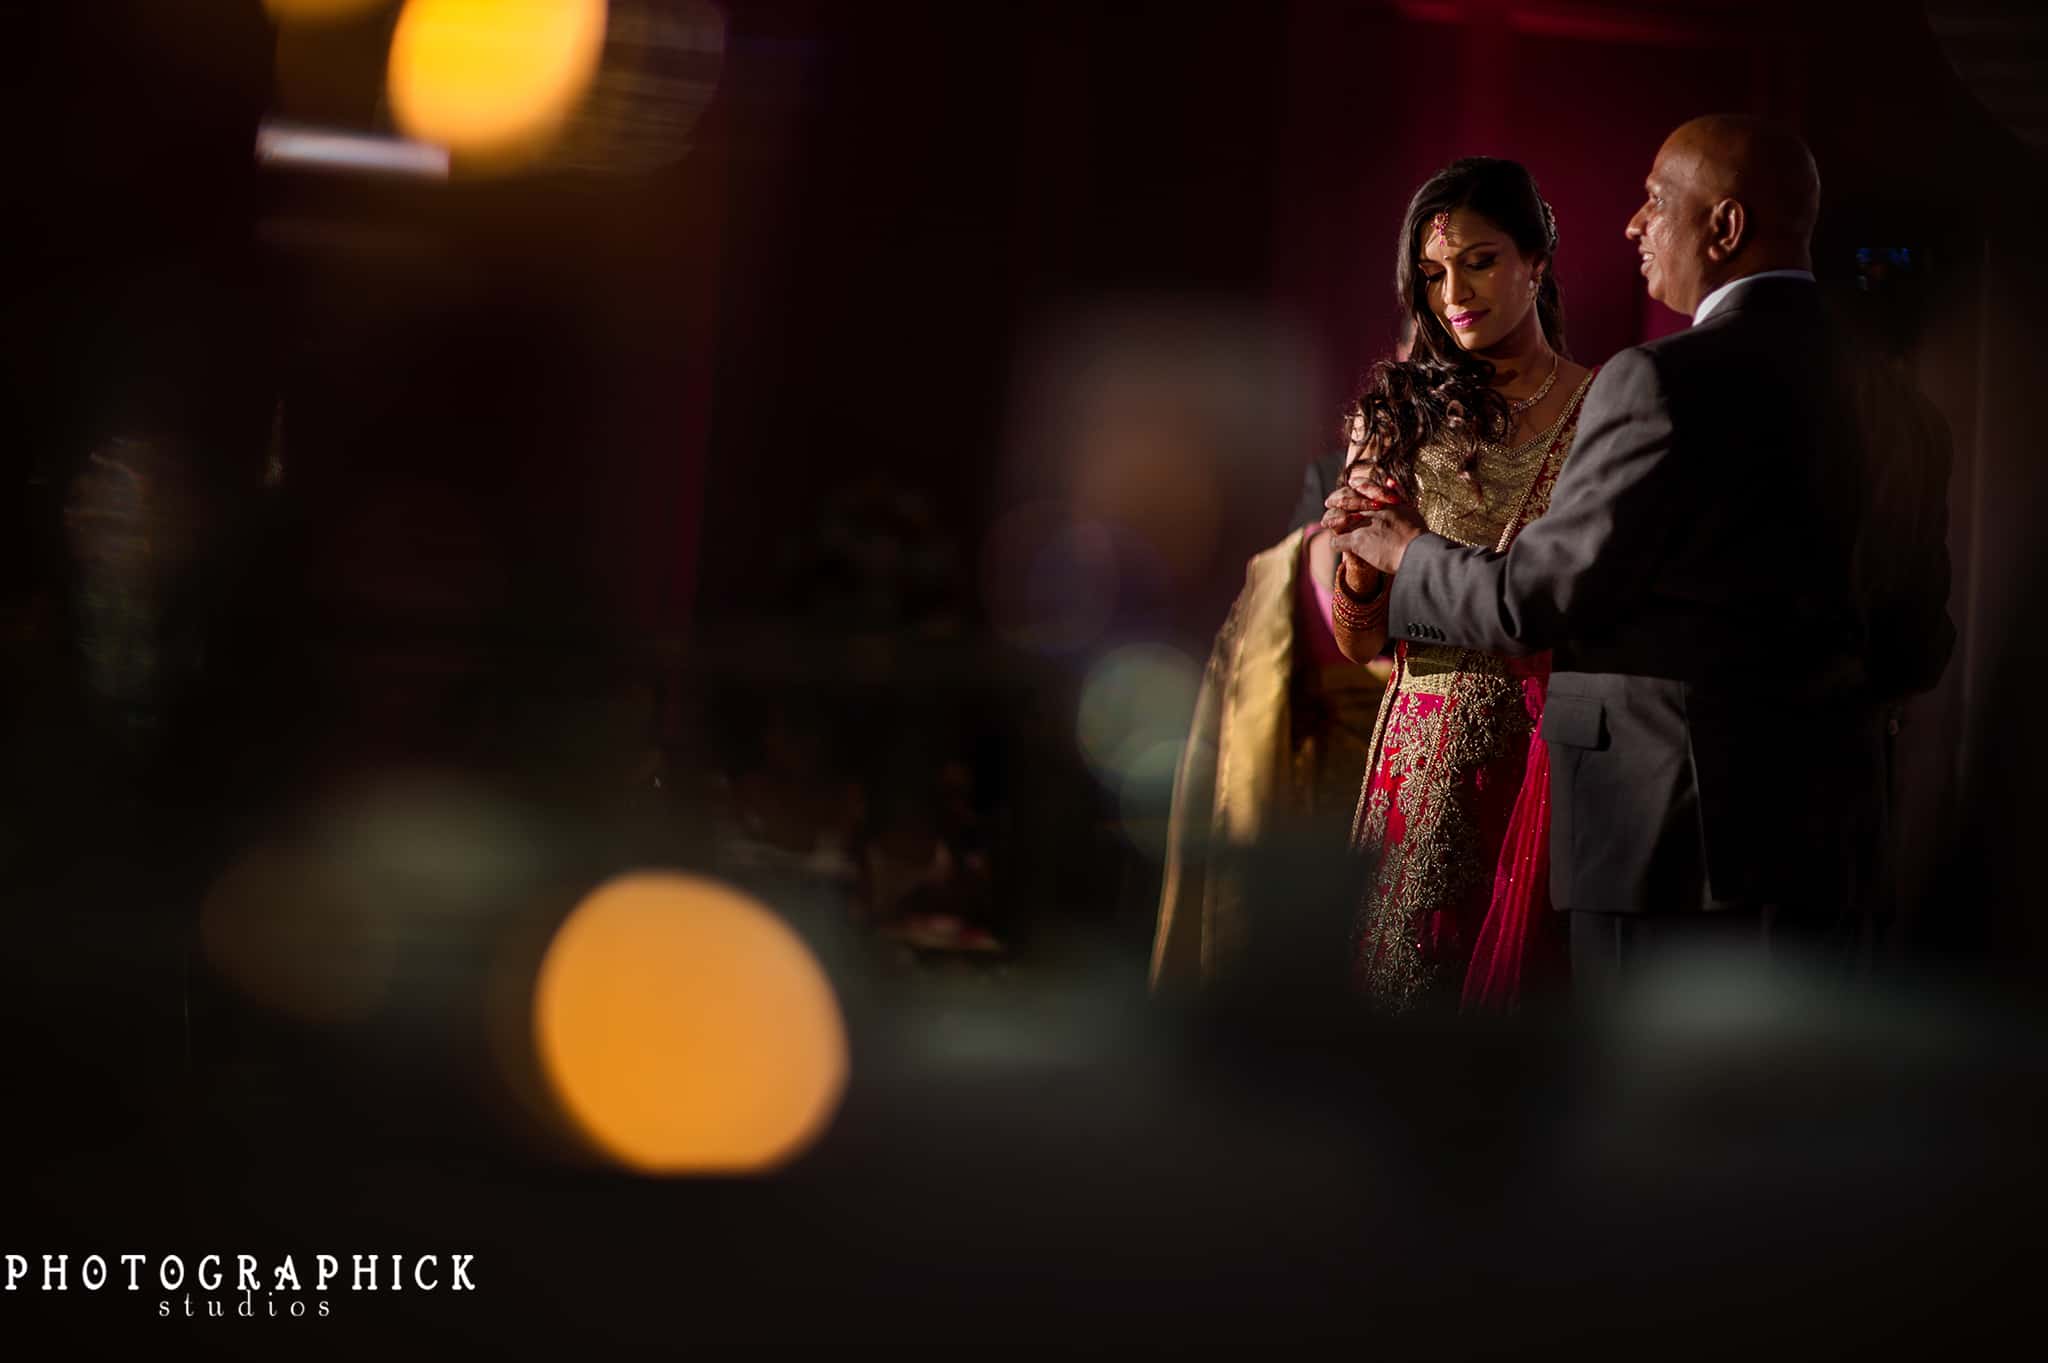 Bethesda Hyatt Indian Wedding, Bethesda Hyatt Indian Wedding: Nitya and Pramod